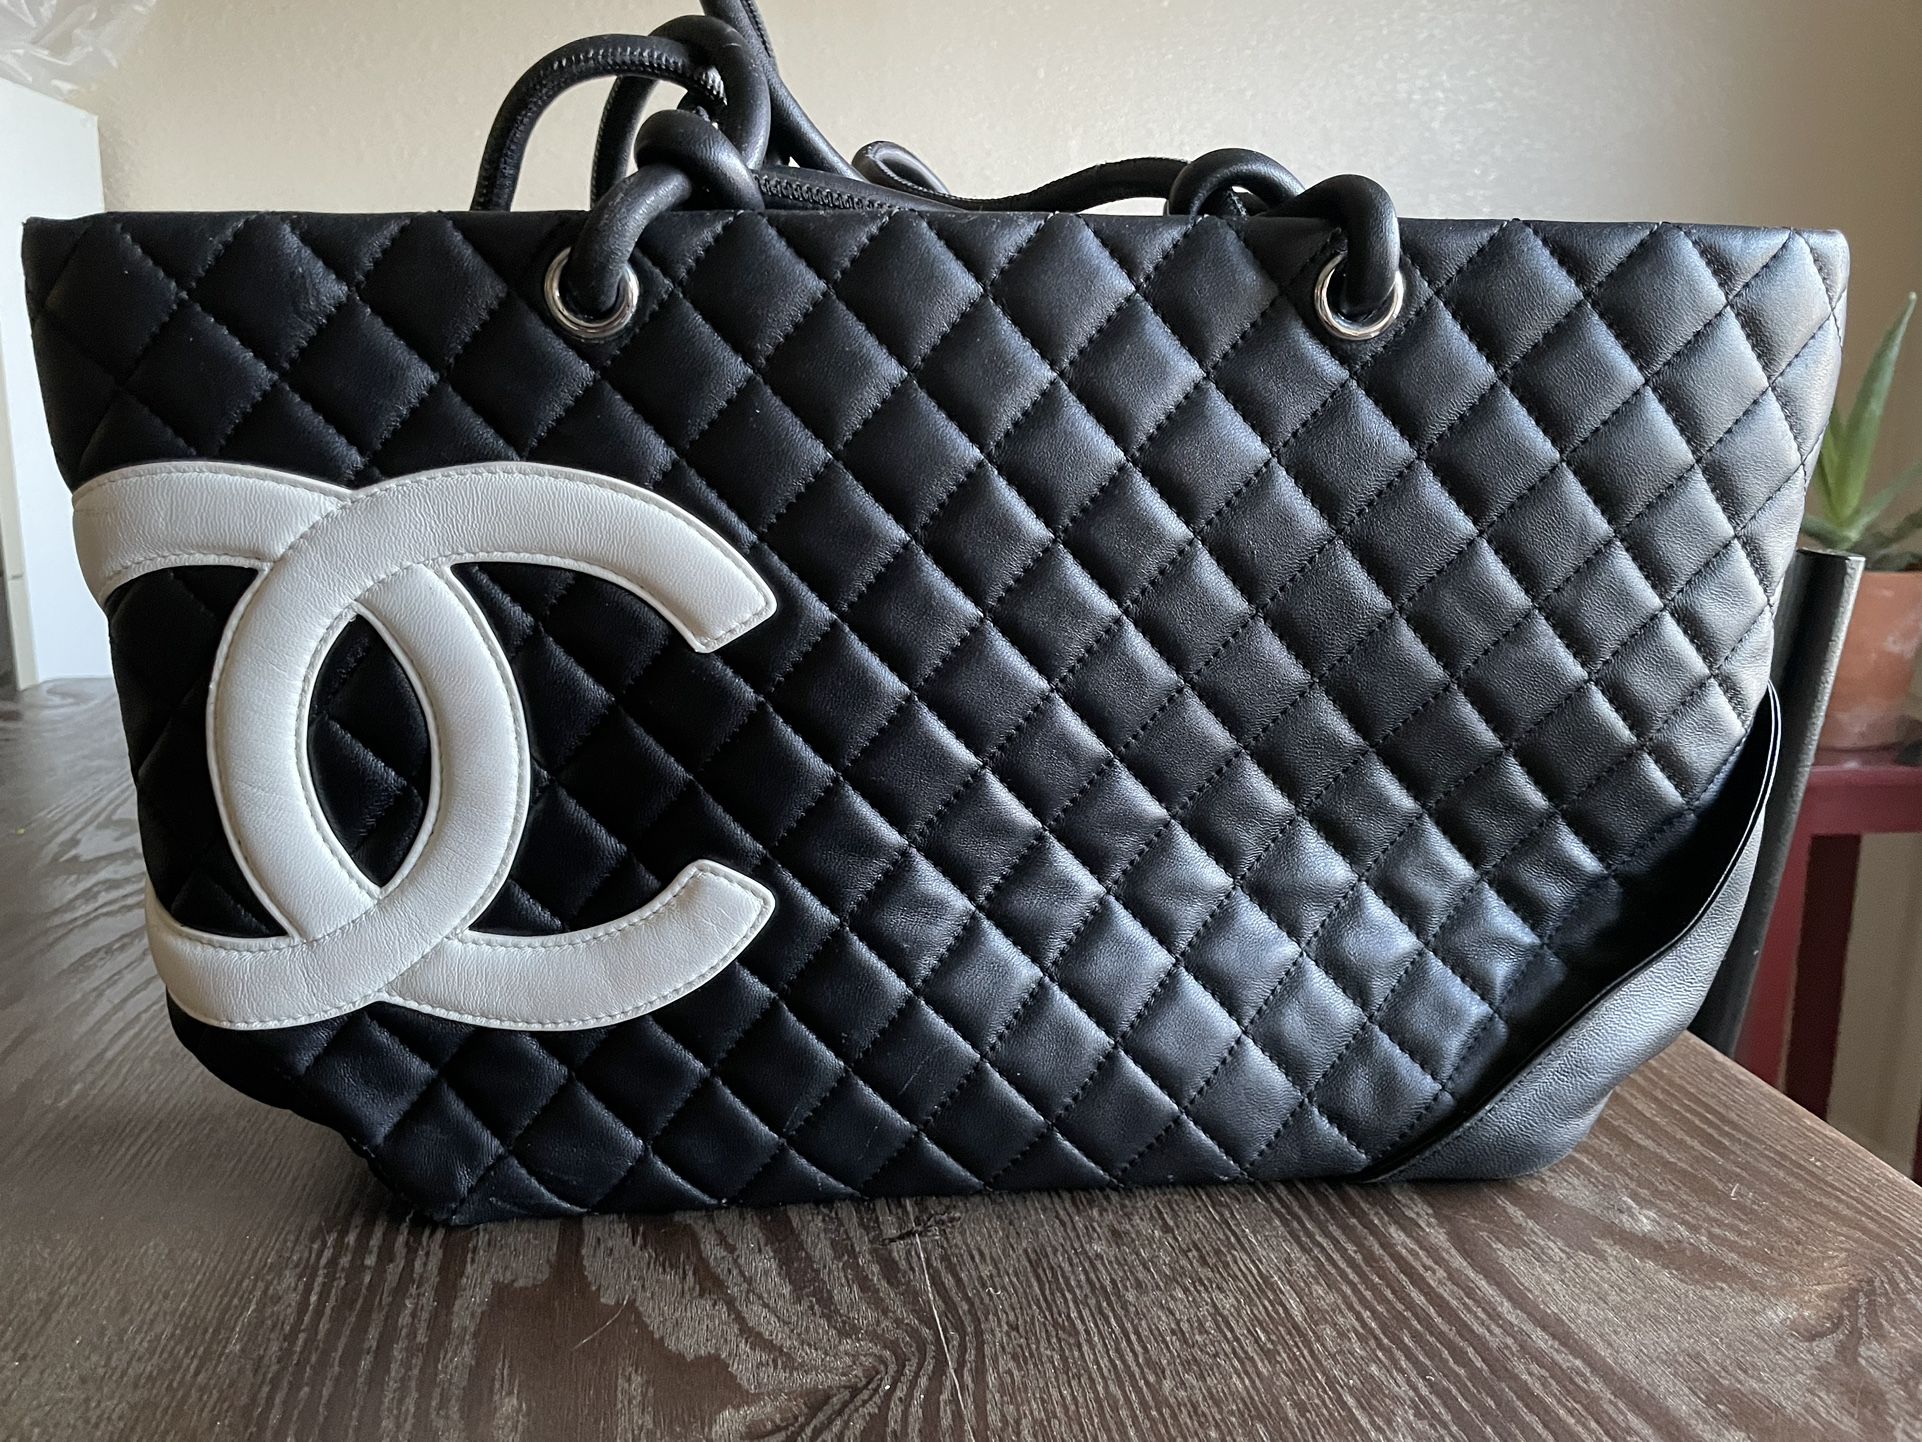 Chanel Cambon Shoulder Tote Bag for Sale in Portsmouth, VA - OfferUp